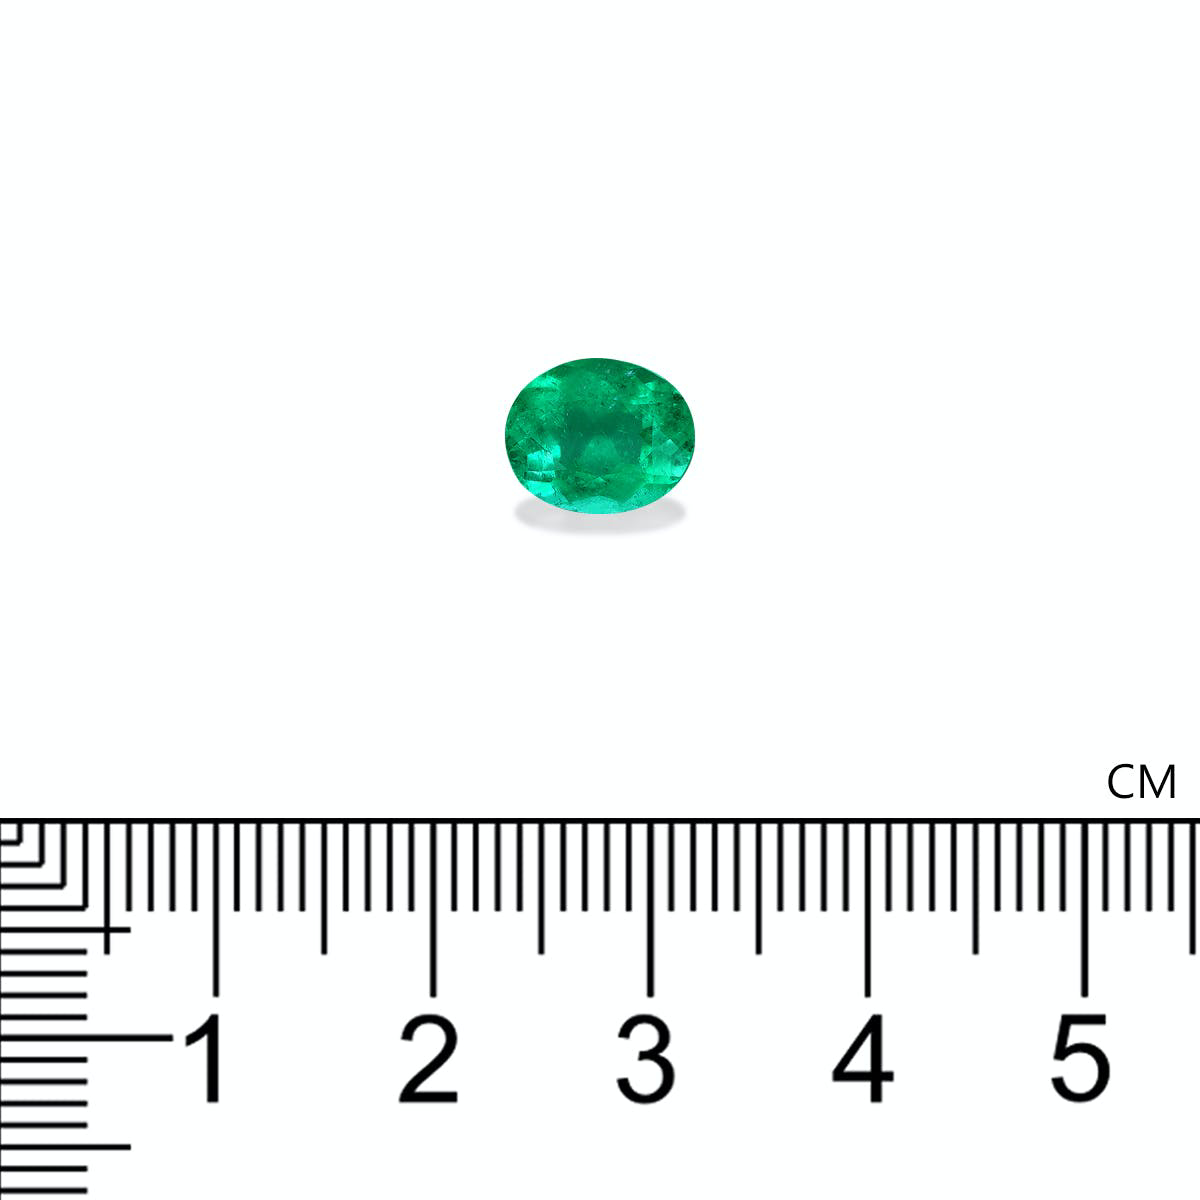 Vivid Green Colombian Emerald 1.76ct - 9x7mm (EM0093)